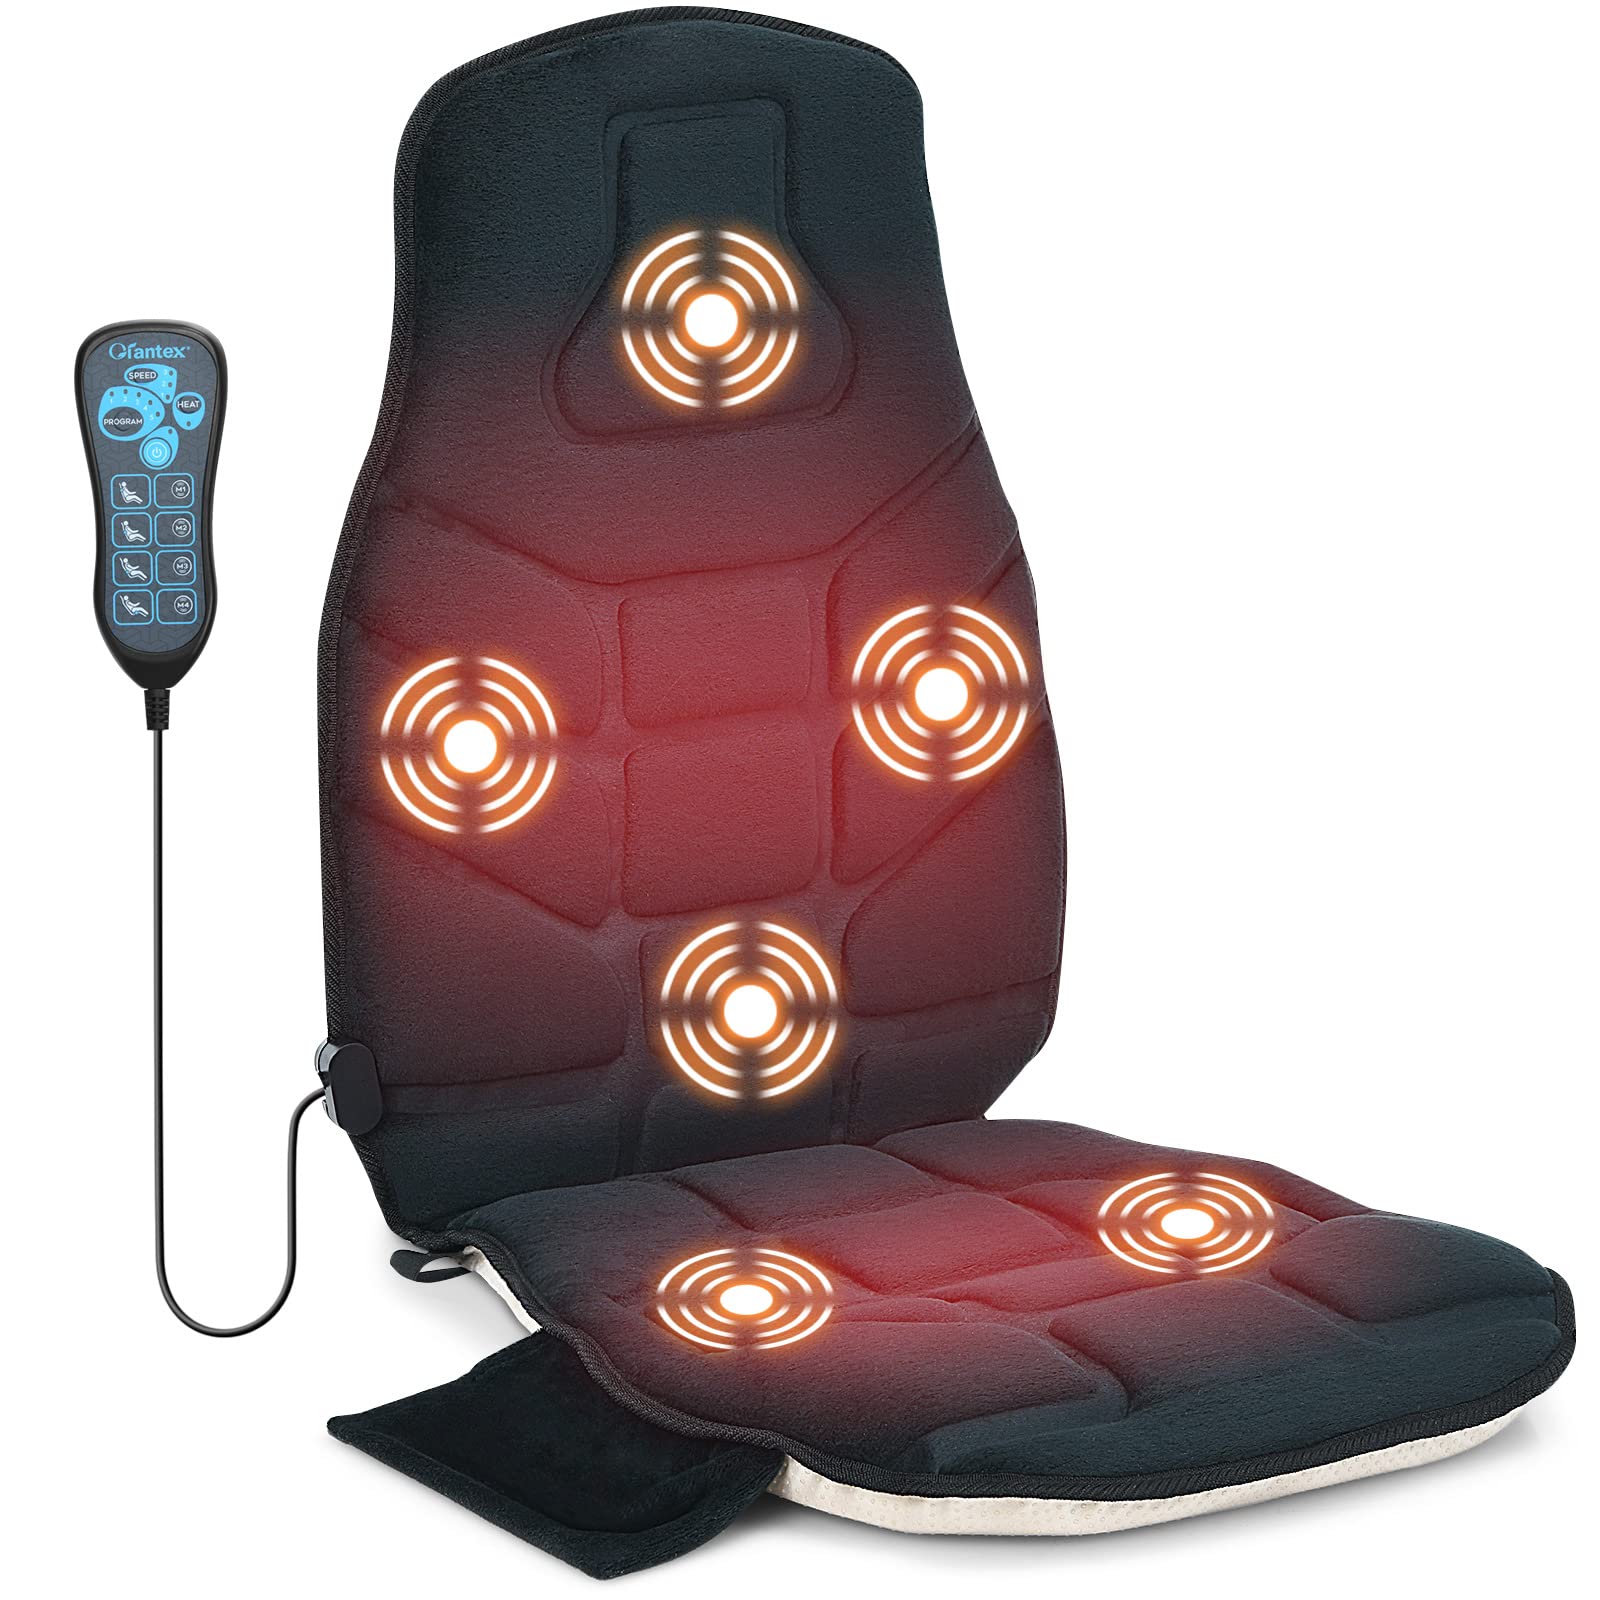 Giantex Air Pressure Massage Back Heater Wireless Speaker, Purple